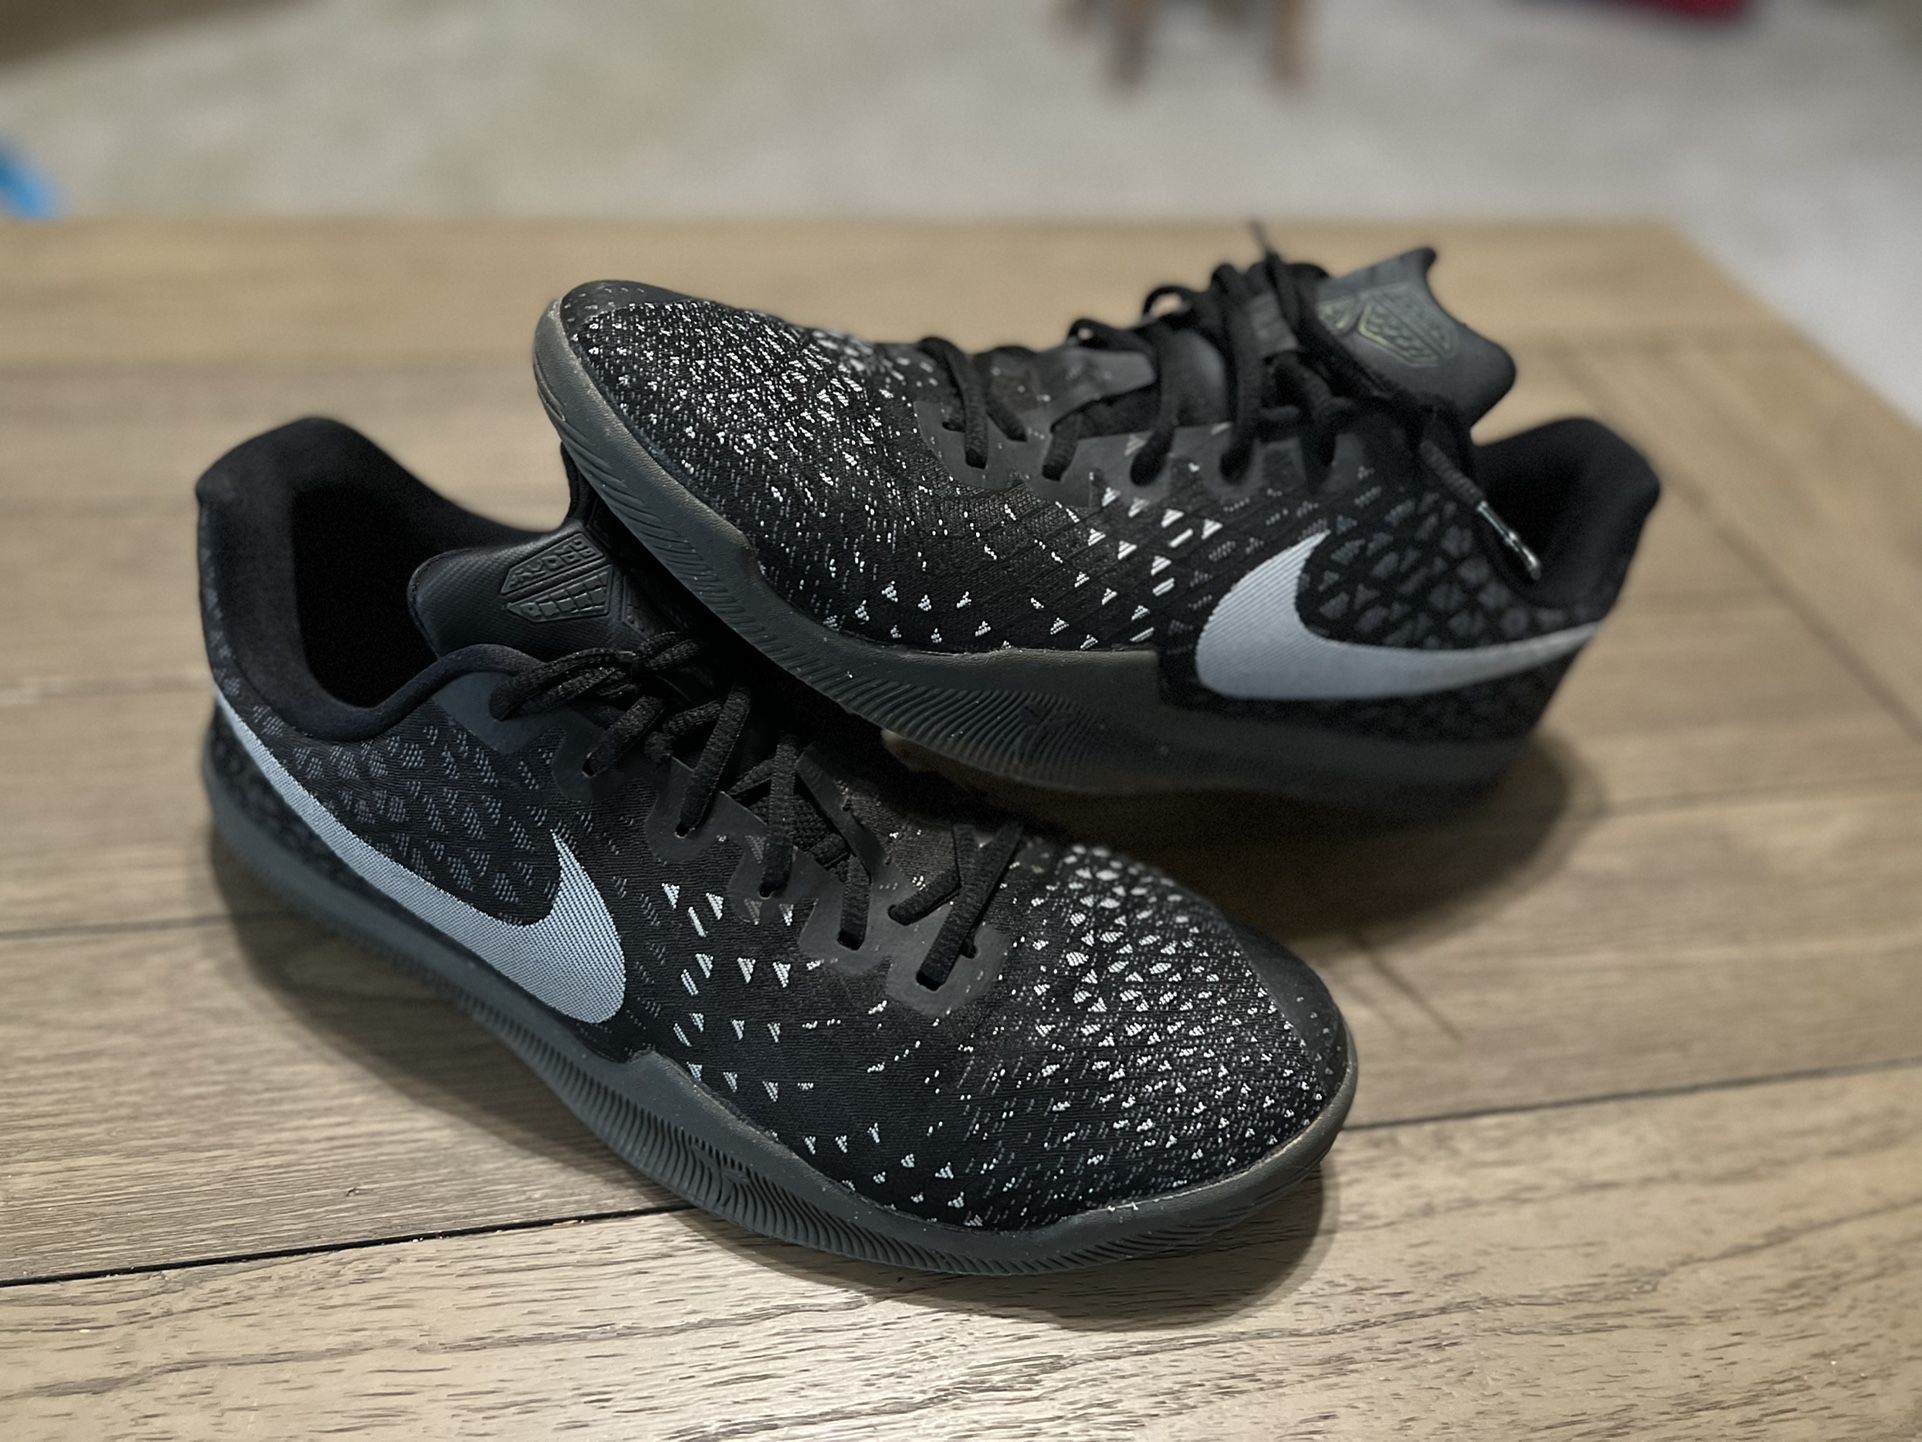 Mens Sz Nike Kobe's Instinct for Sale in Yukon, - OfferUp